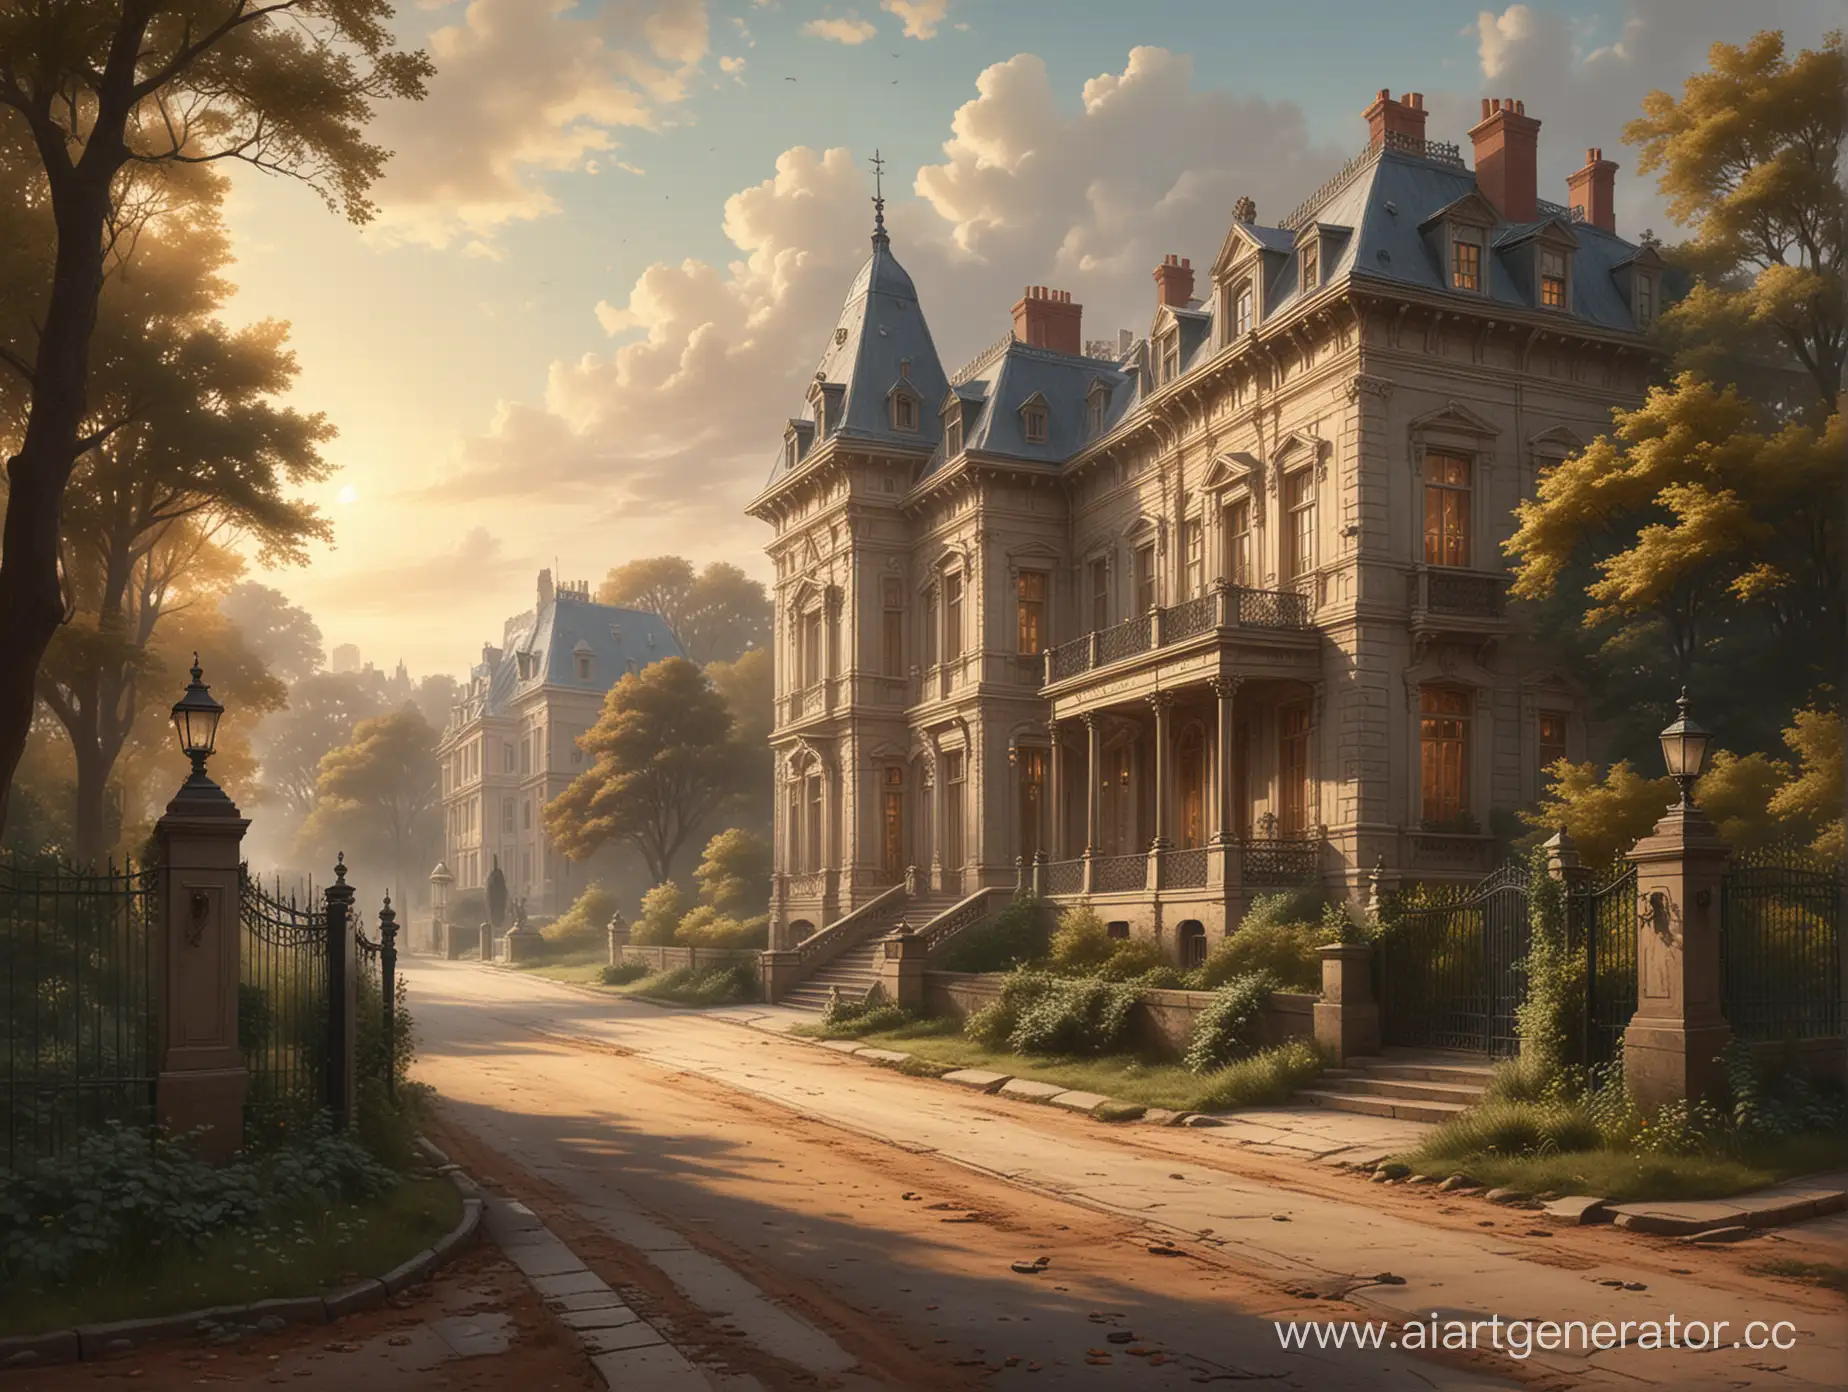 Luxurious-19th-Century-Mansion-on-TreeLined-Avenue